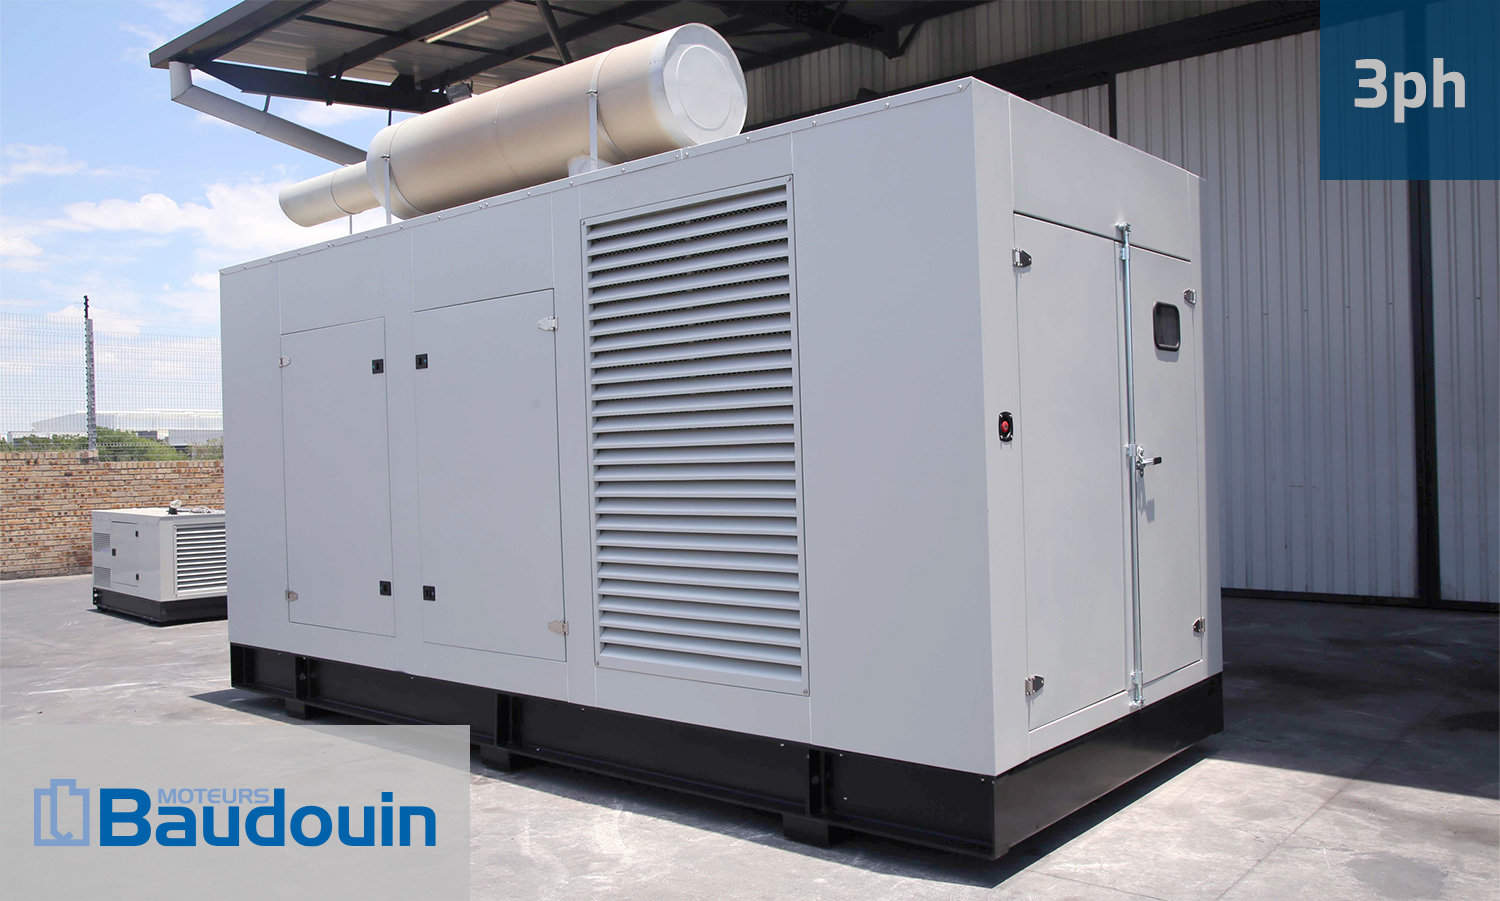 1000kVa Baudouin Diesel Generator for Sale in South Africa. Baudouin Generator Prices. GKB1100.